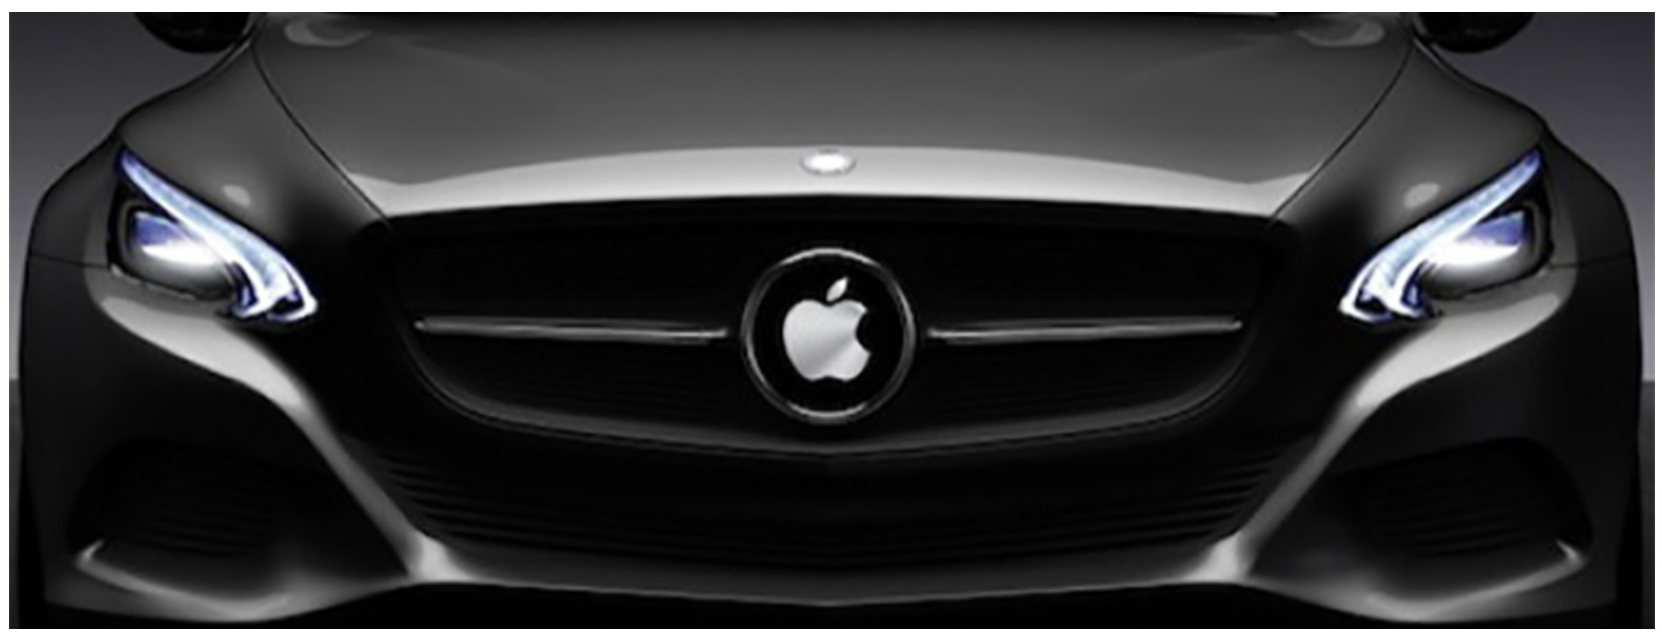 Apple car-myCars